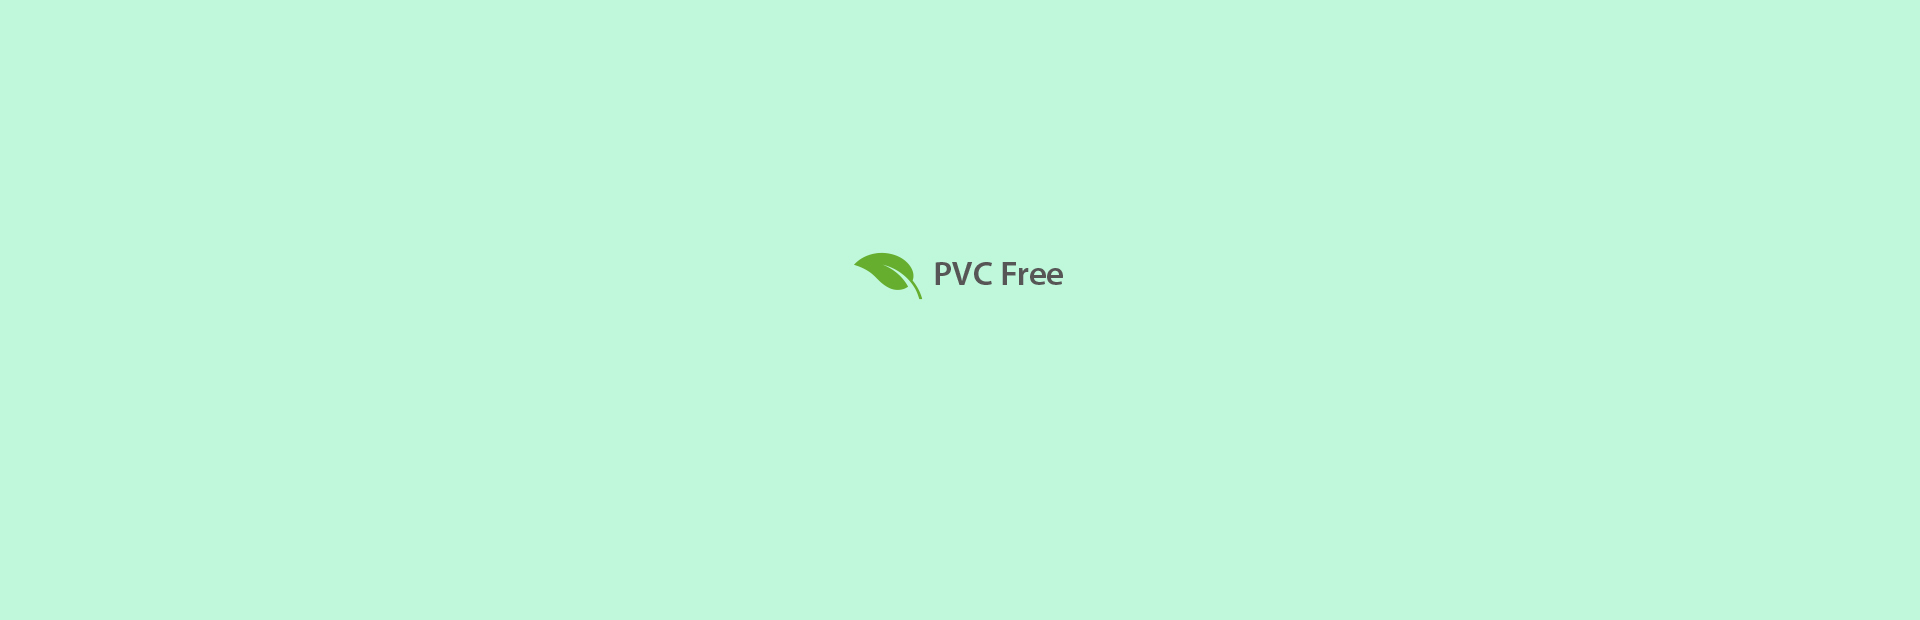 PVC Free Digital Media